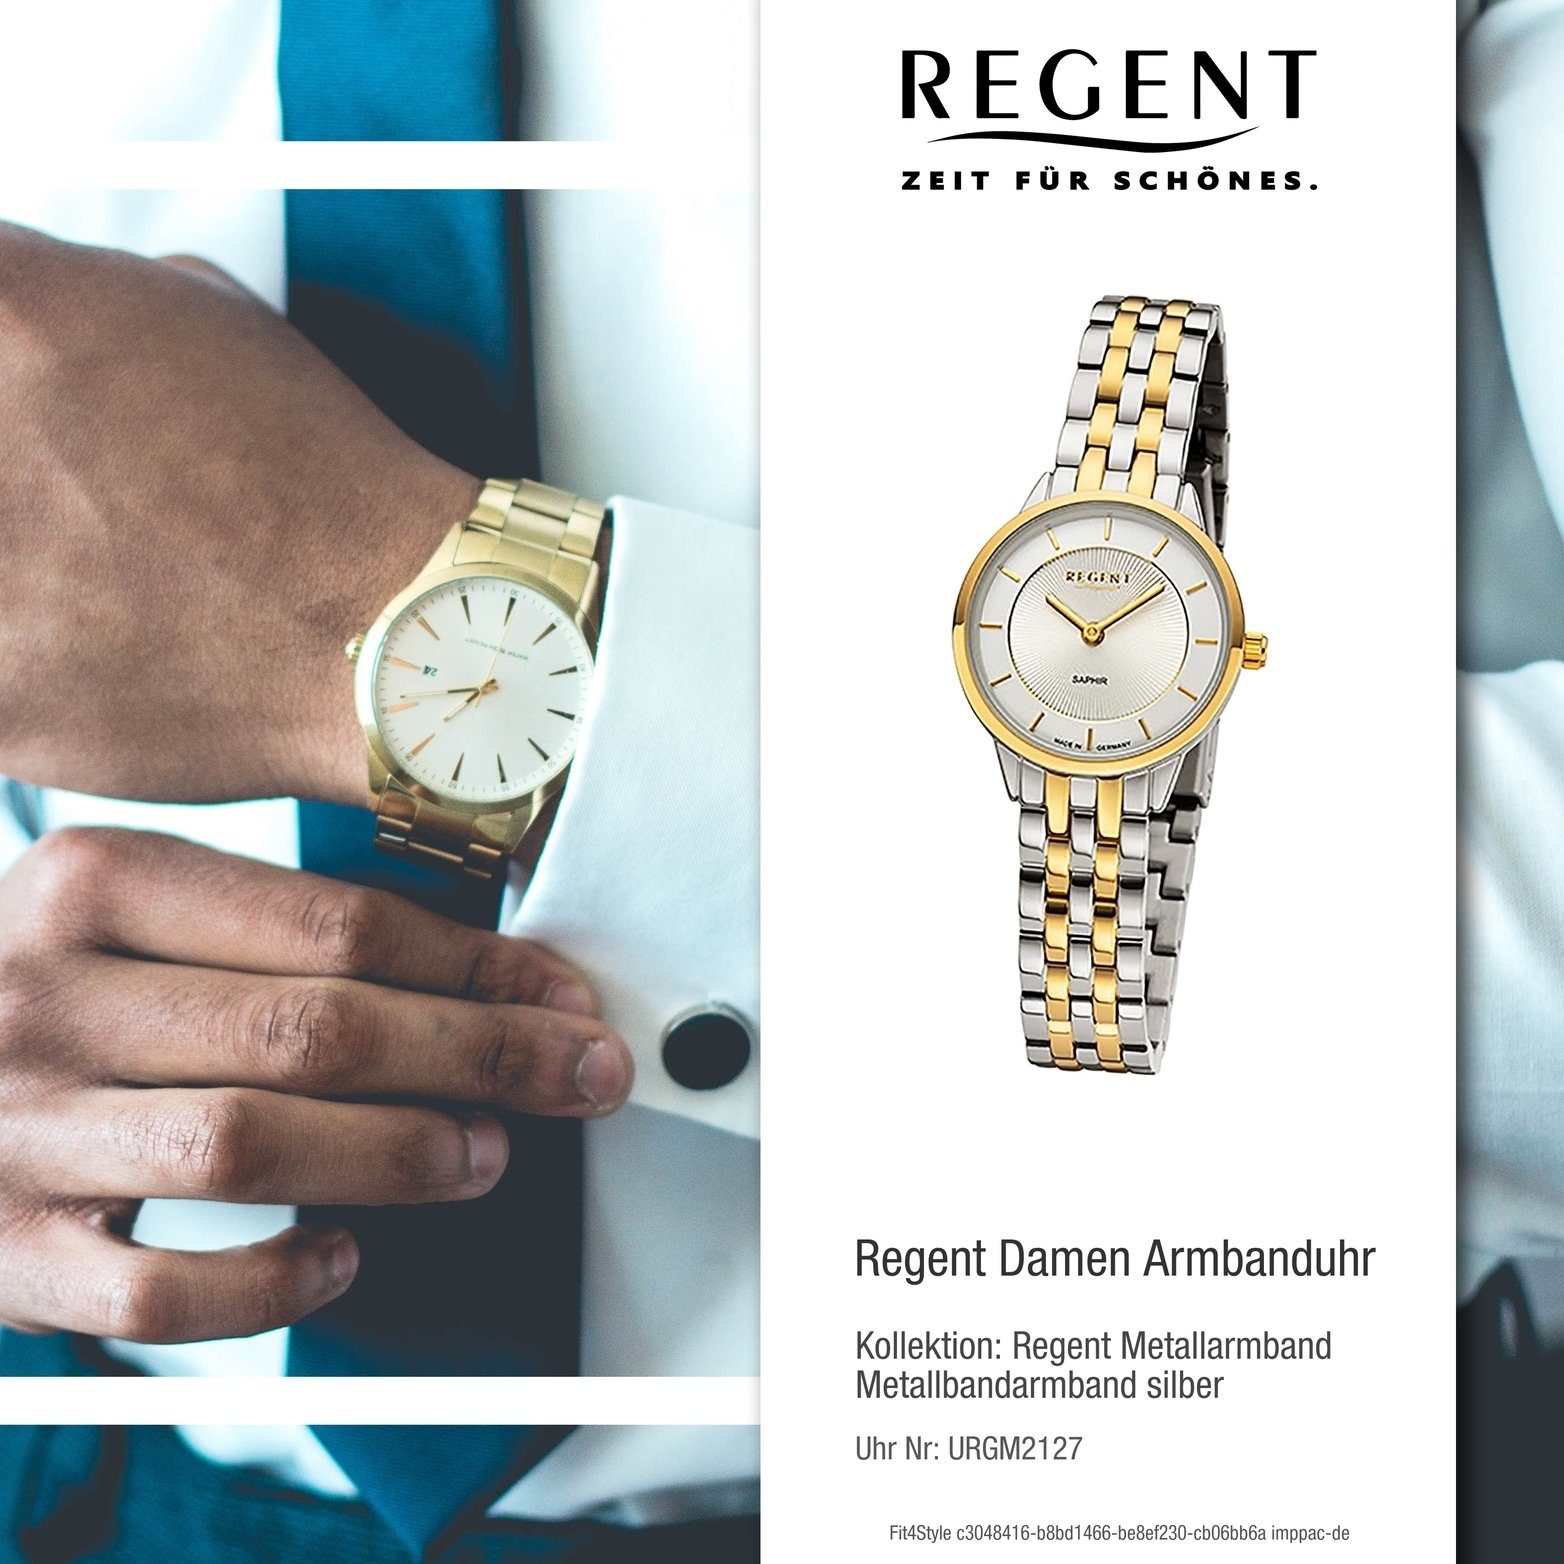 Gehäuse, Quarzuhr Damen klein Armbanduhr silber, Metallbandarmband Analog, Regent rundes Damenuhr gold, Regent (27mm)